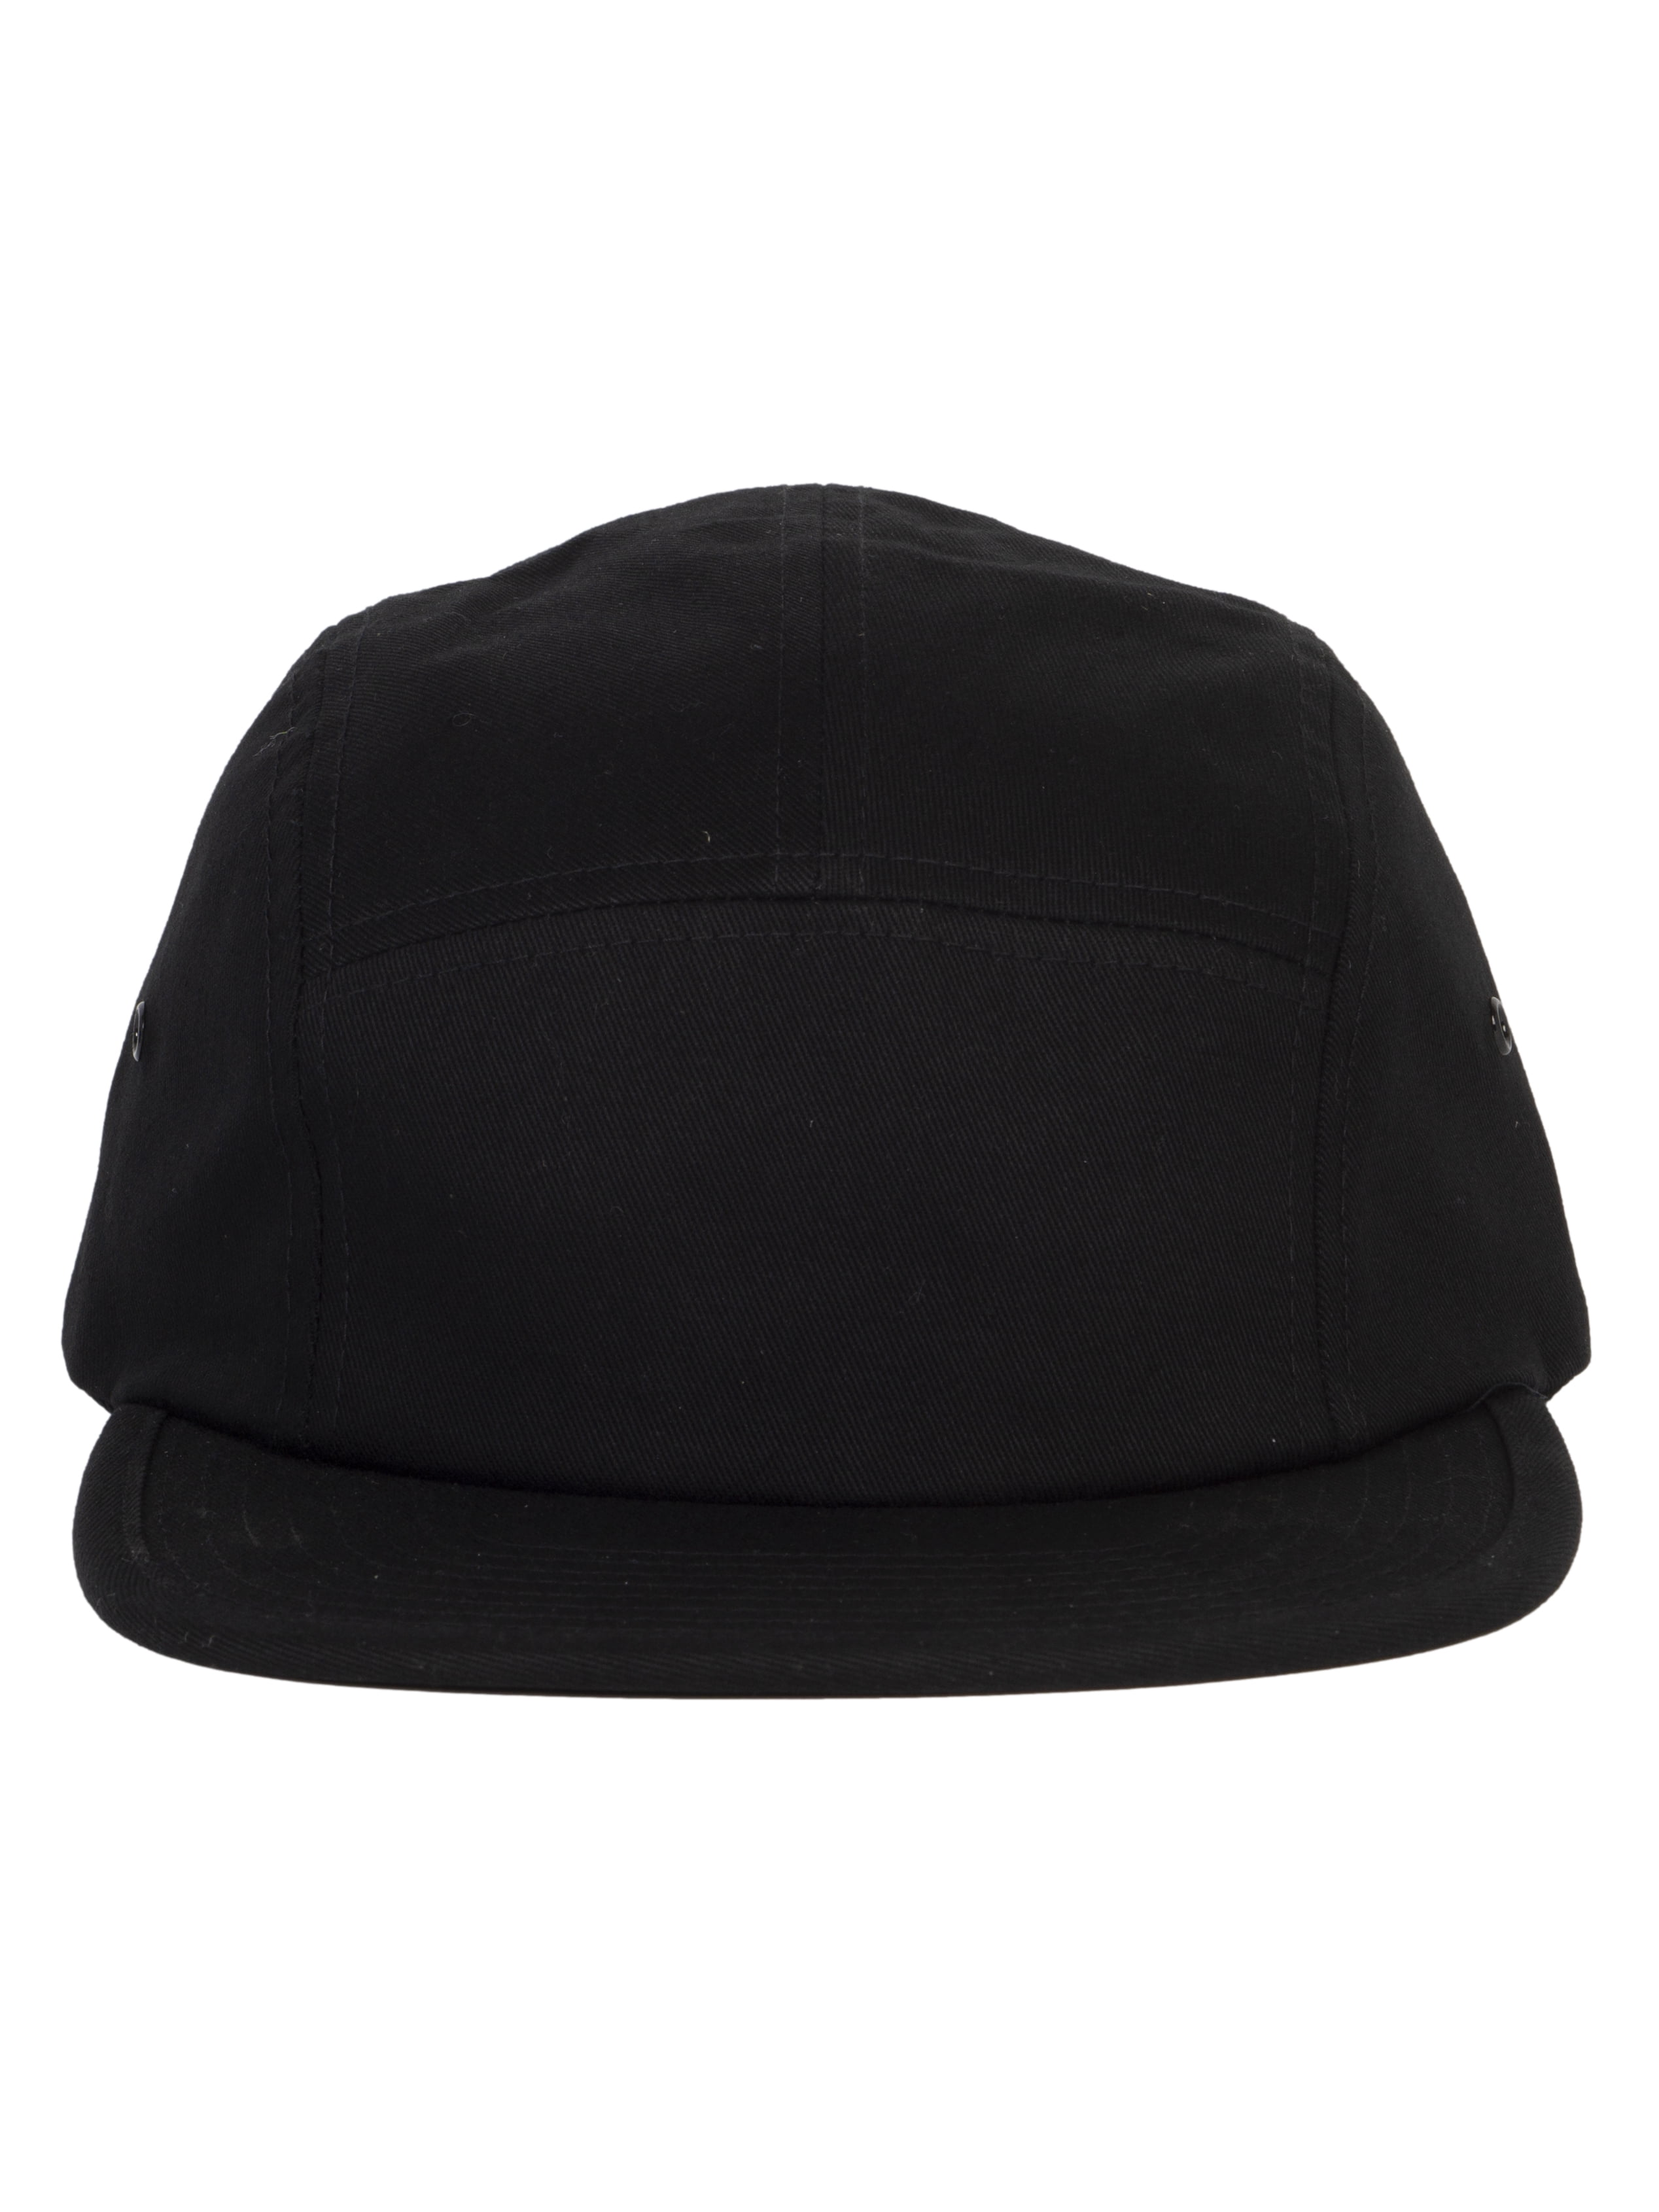 Black For 5 Jockey Hat Cap Men Top Panel Classic Bill Baseball Flat Headwear